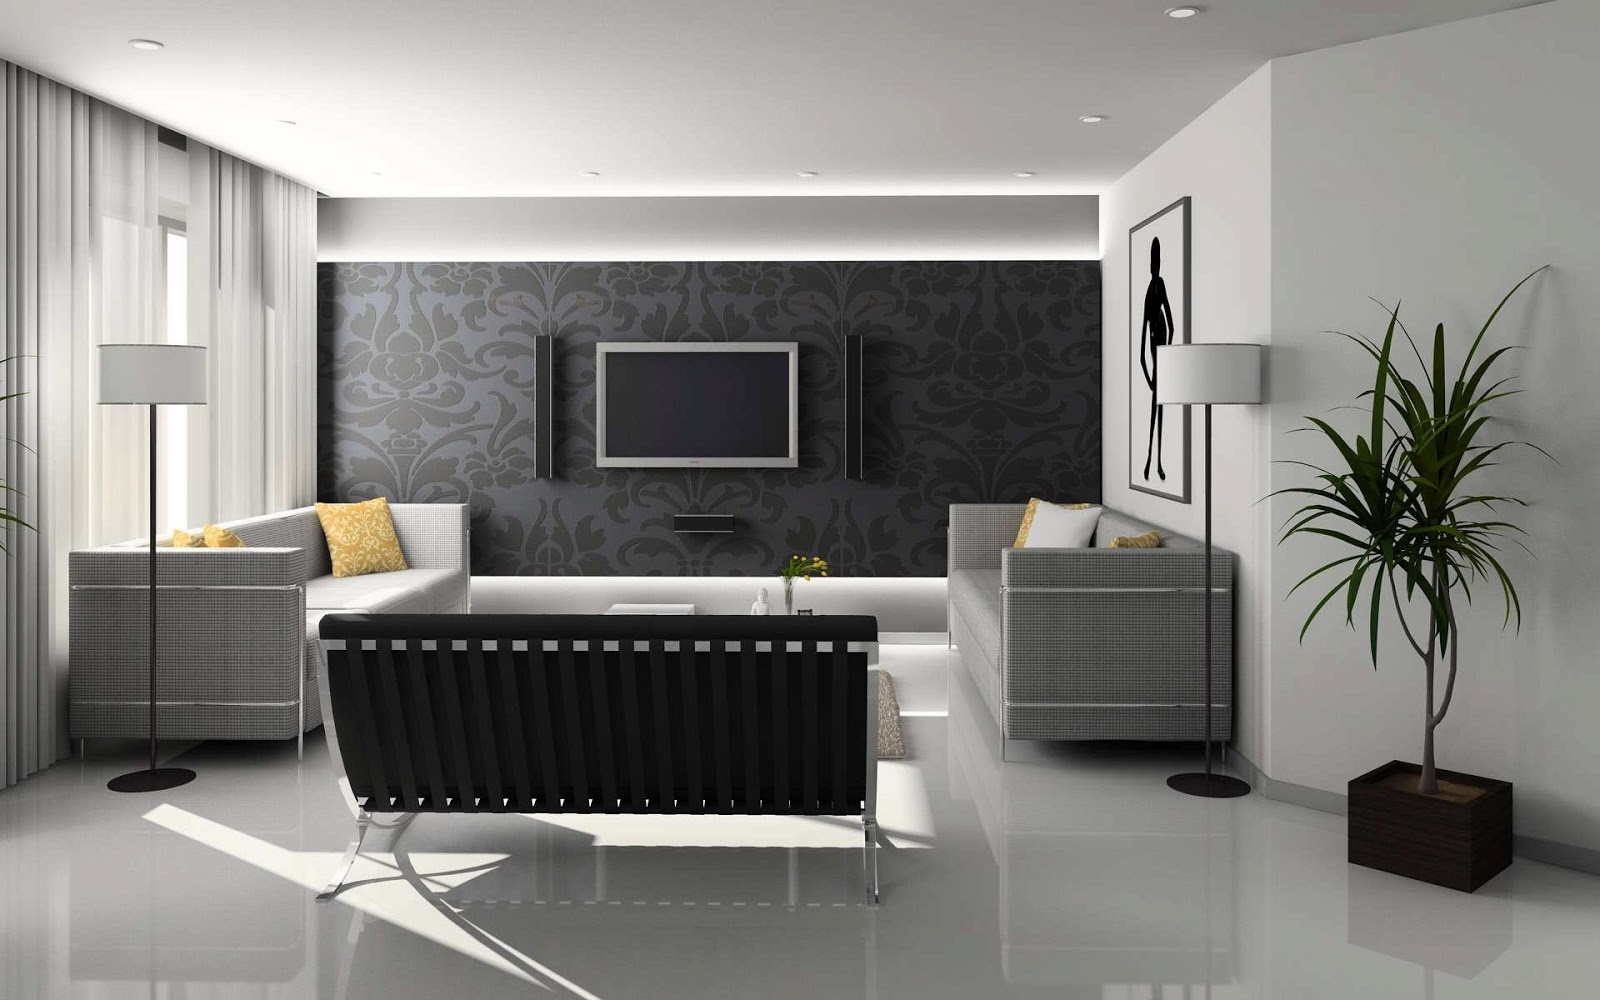 New Home Interior Design Images